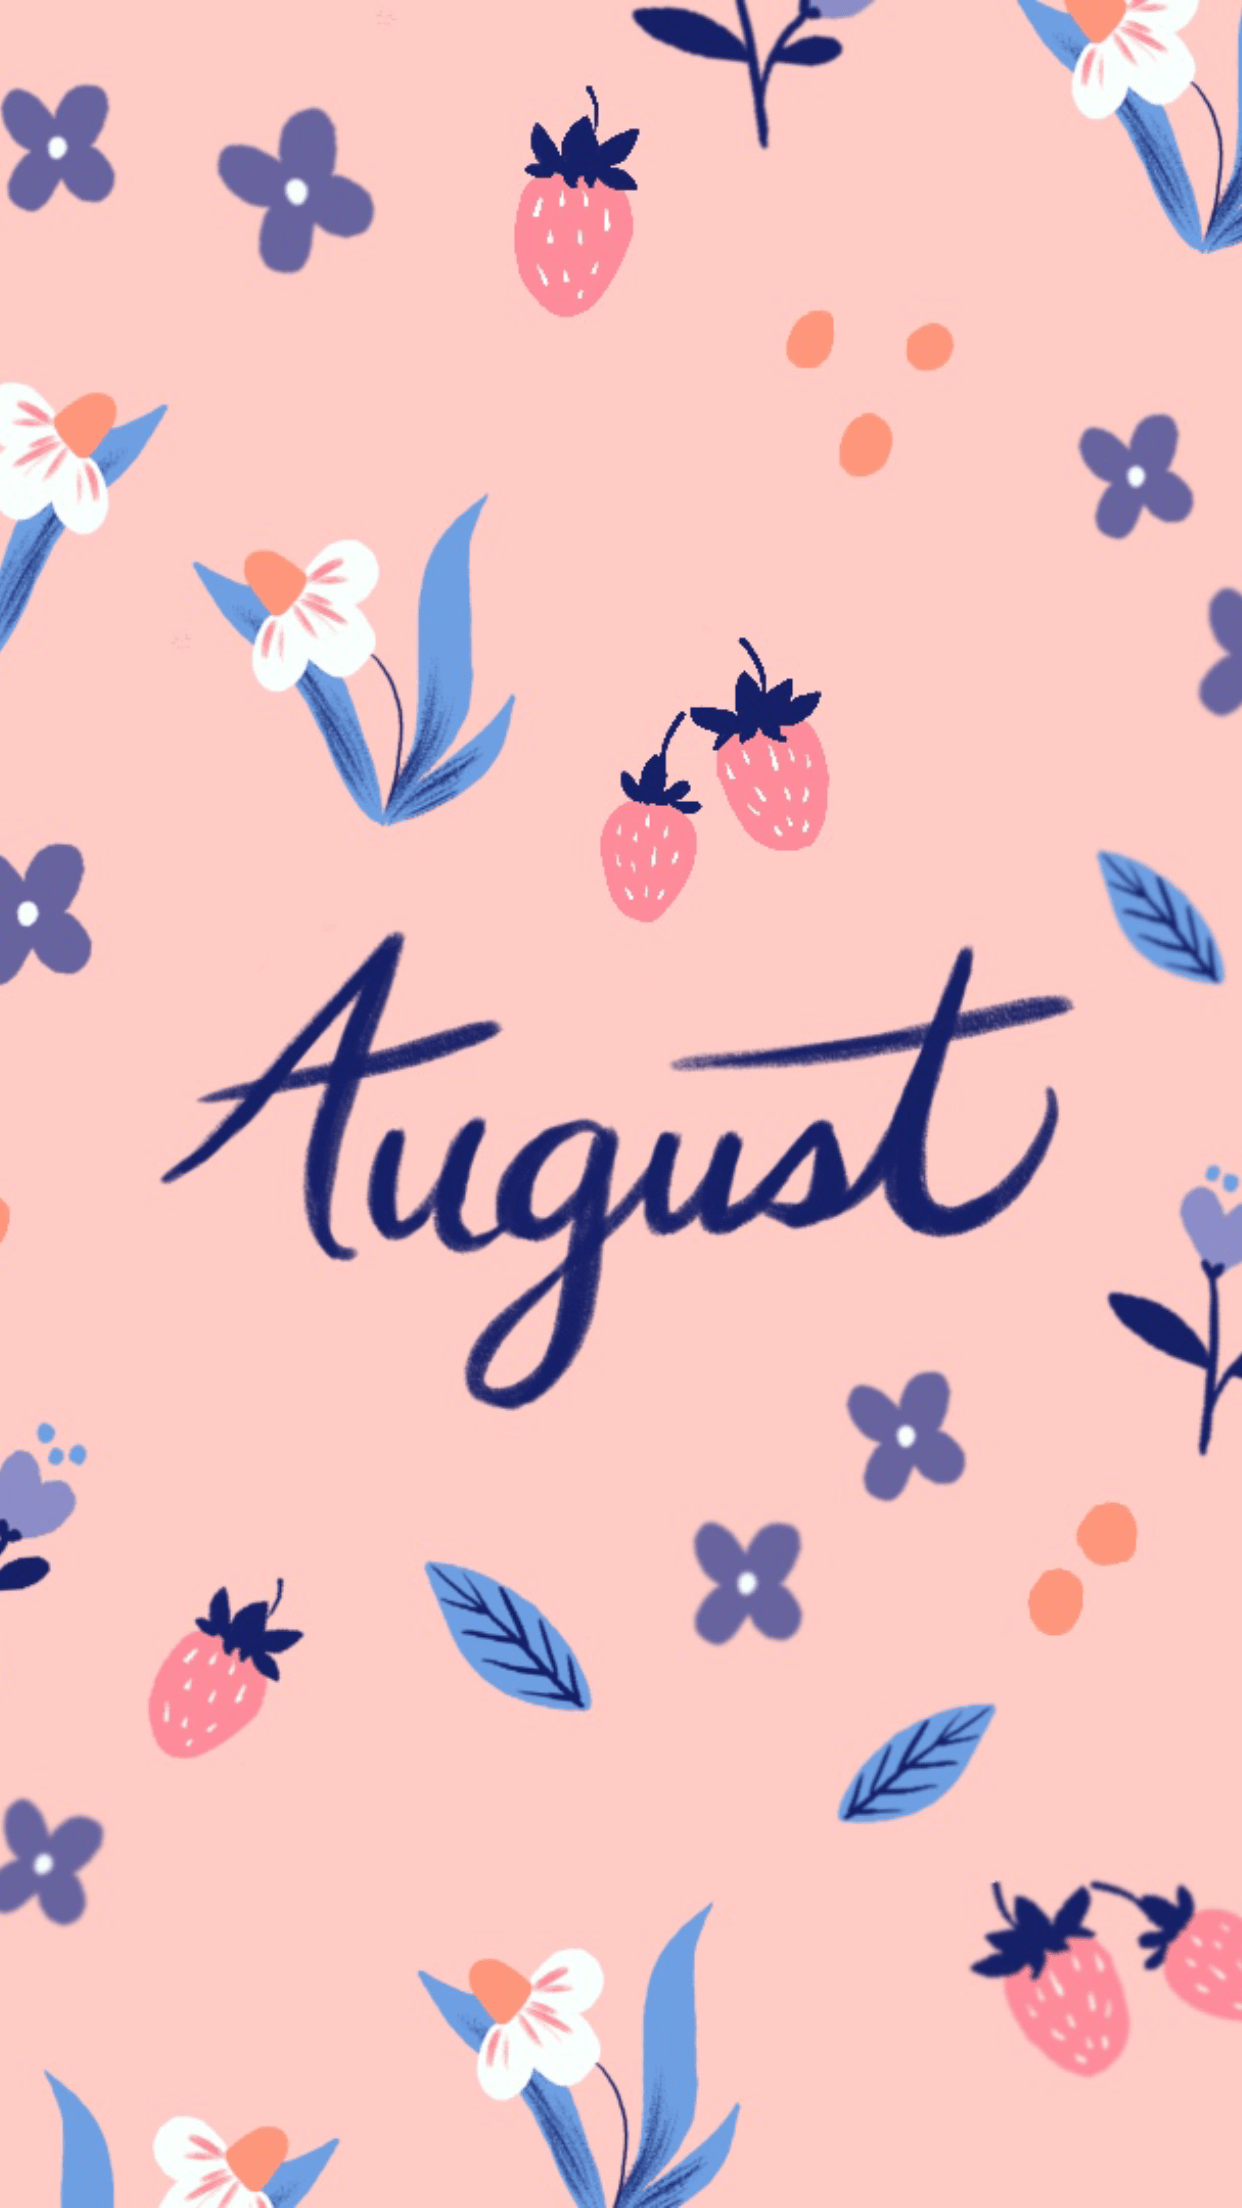 Best August ideas. hello august, months in a year, august